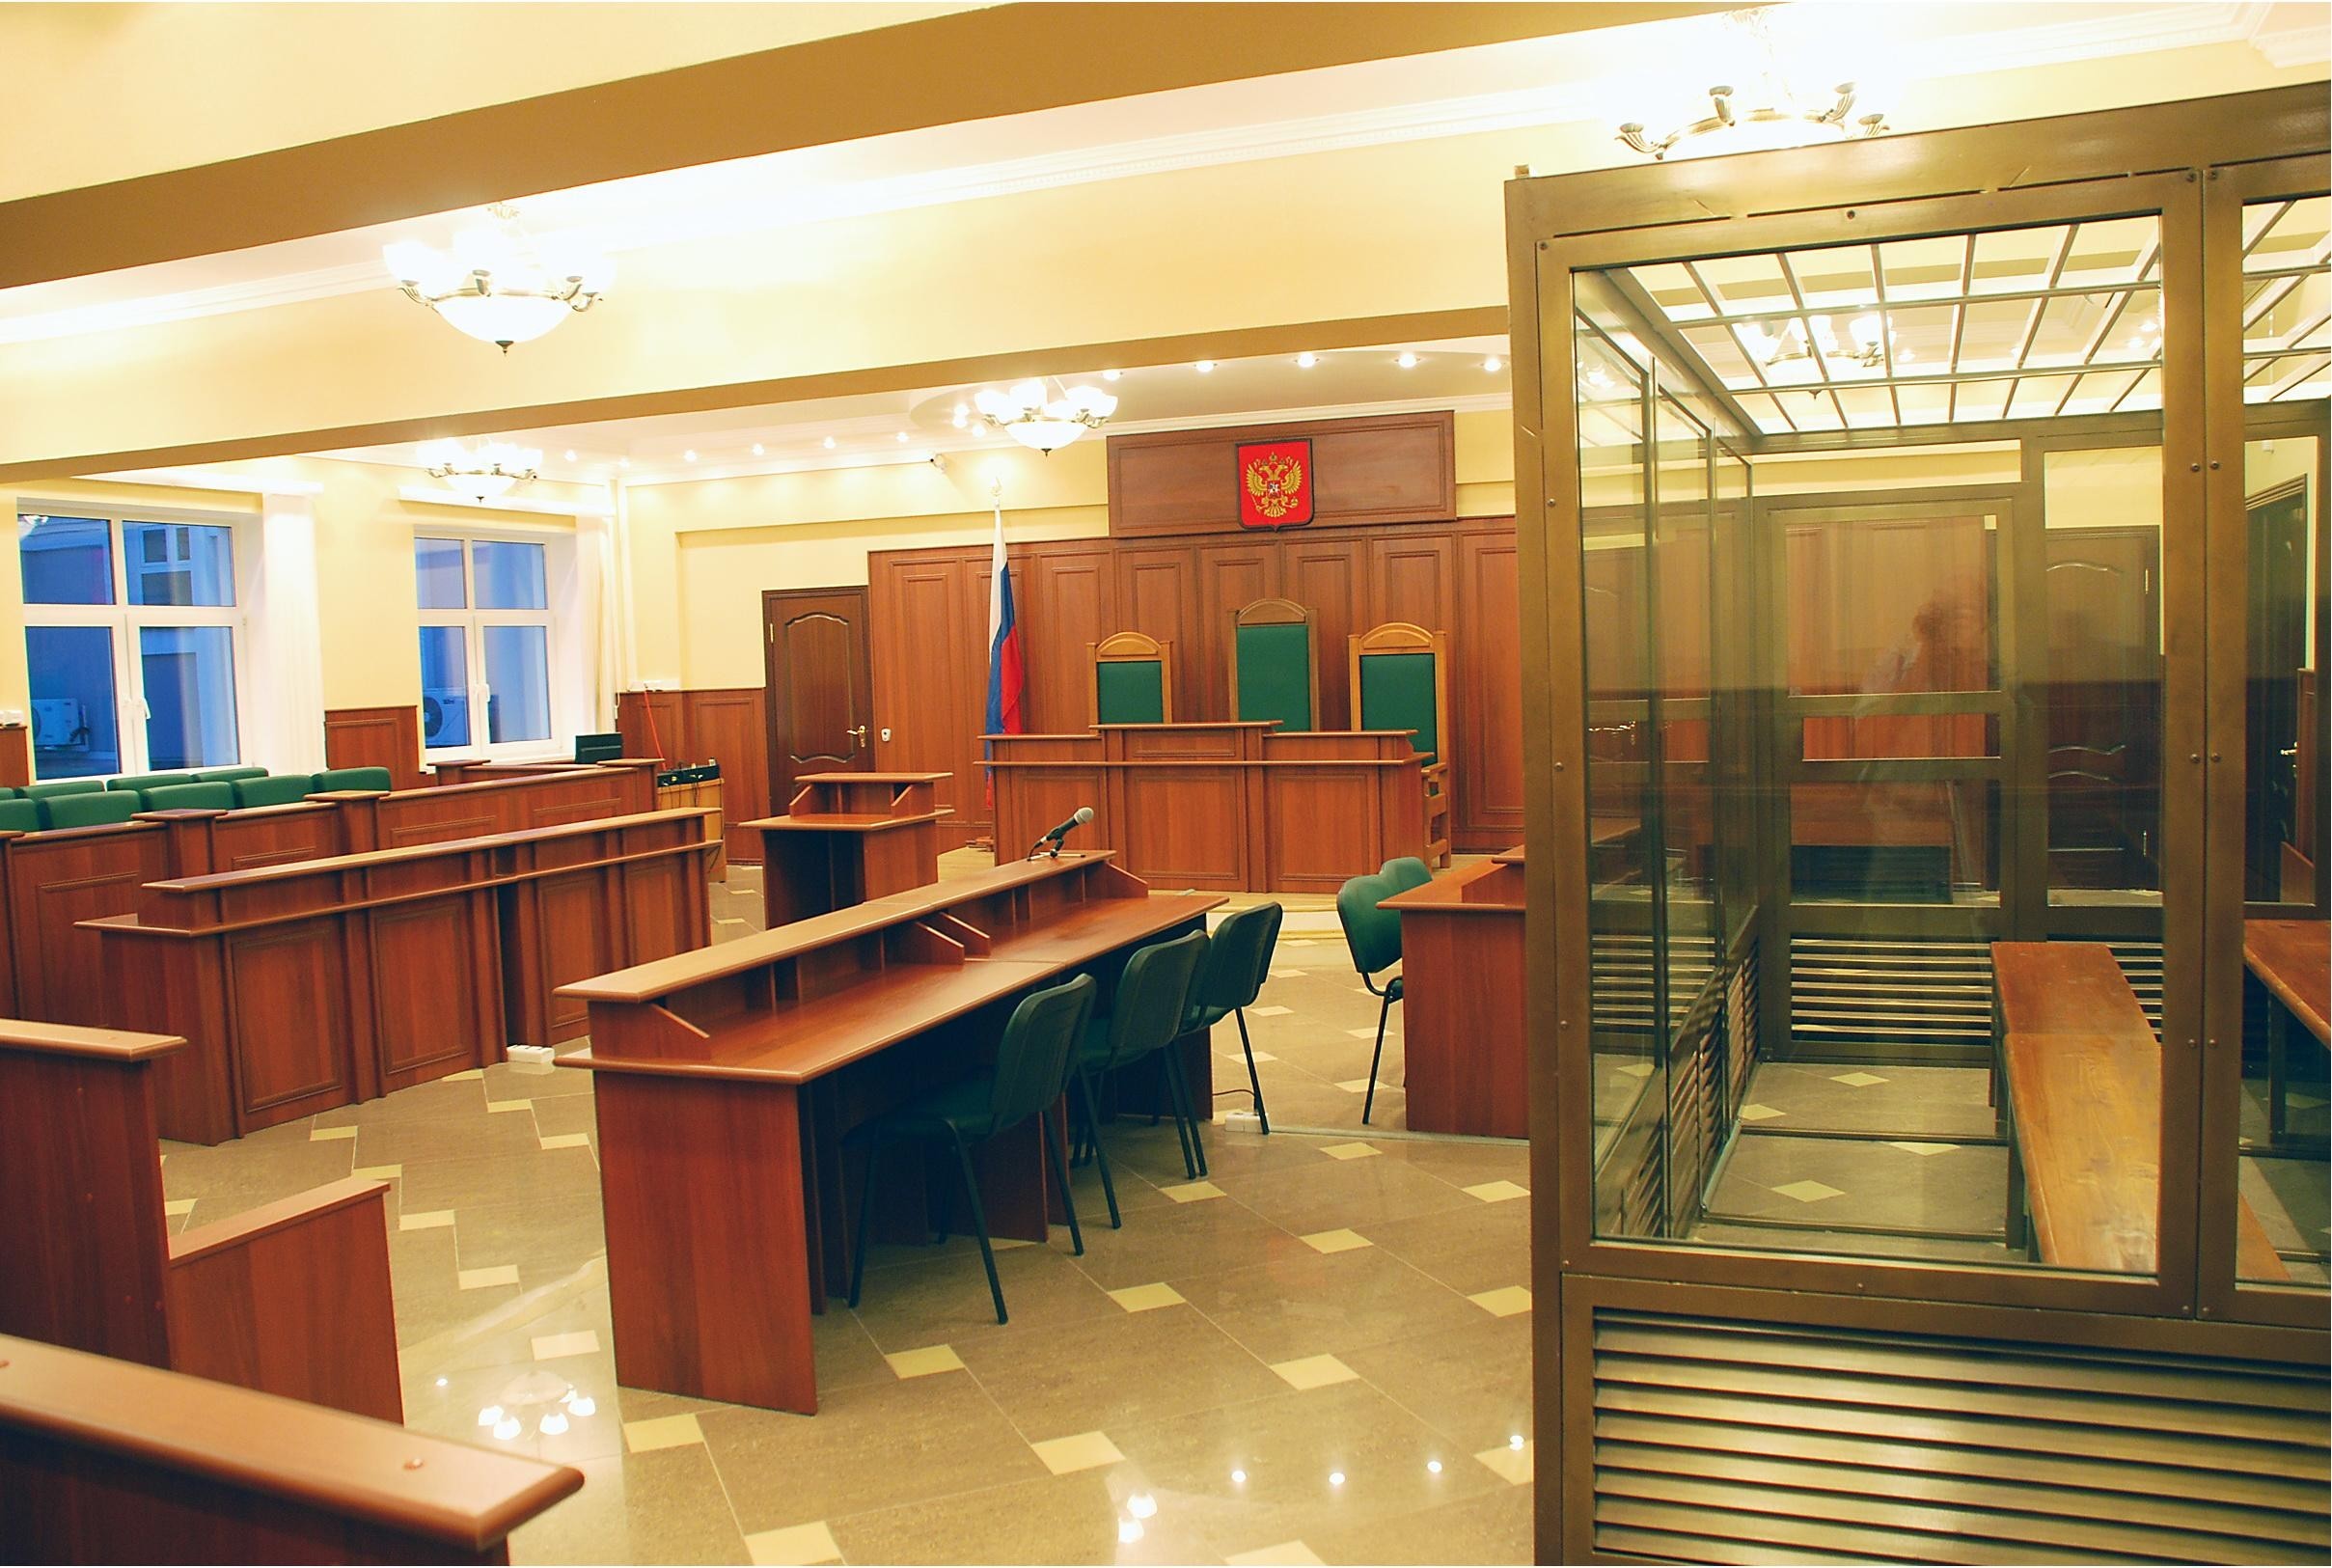 Зал Судебного Заседания Фото